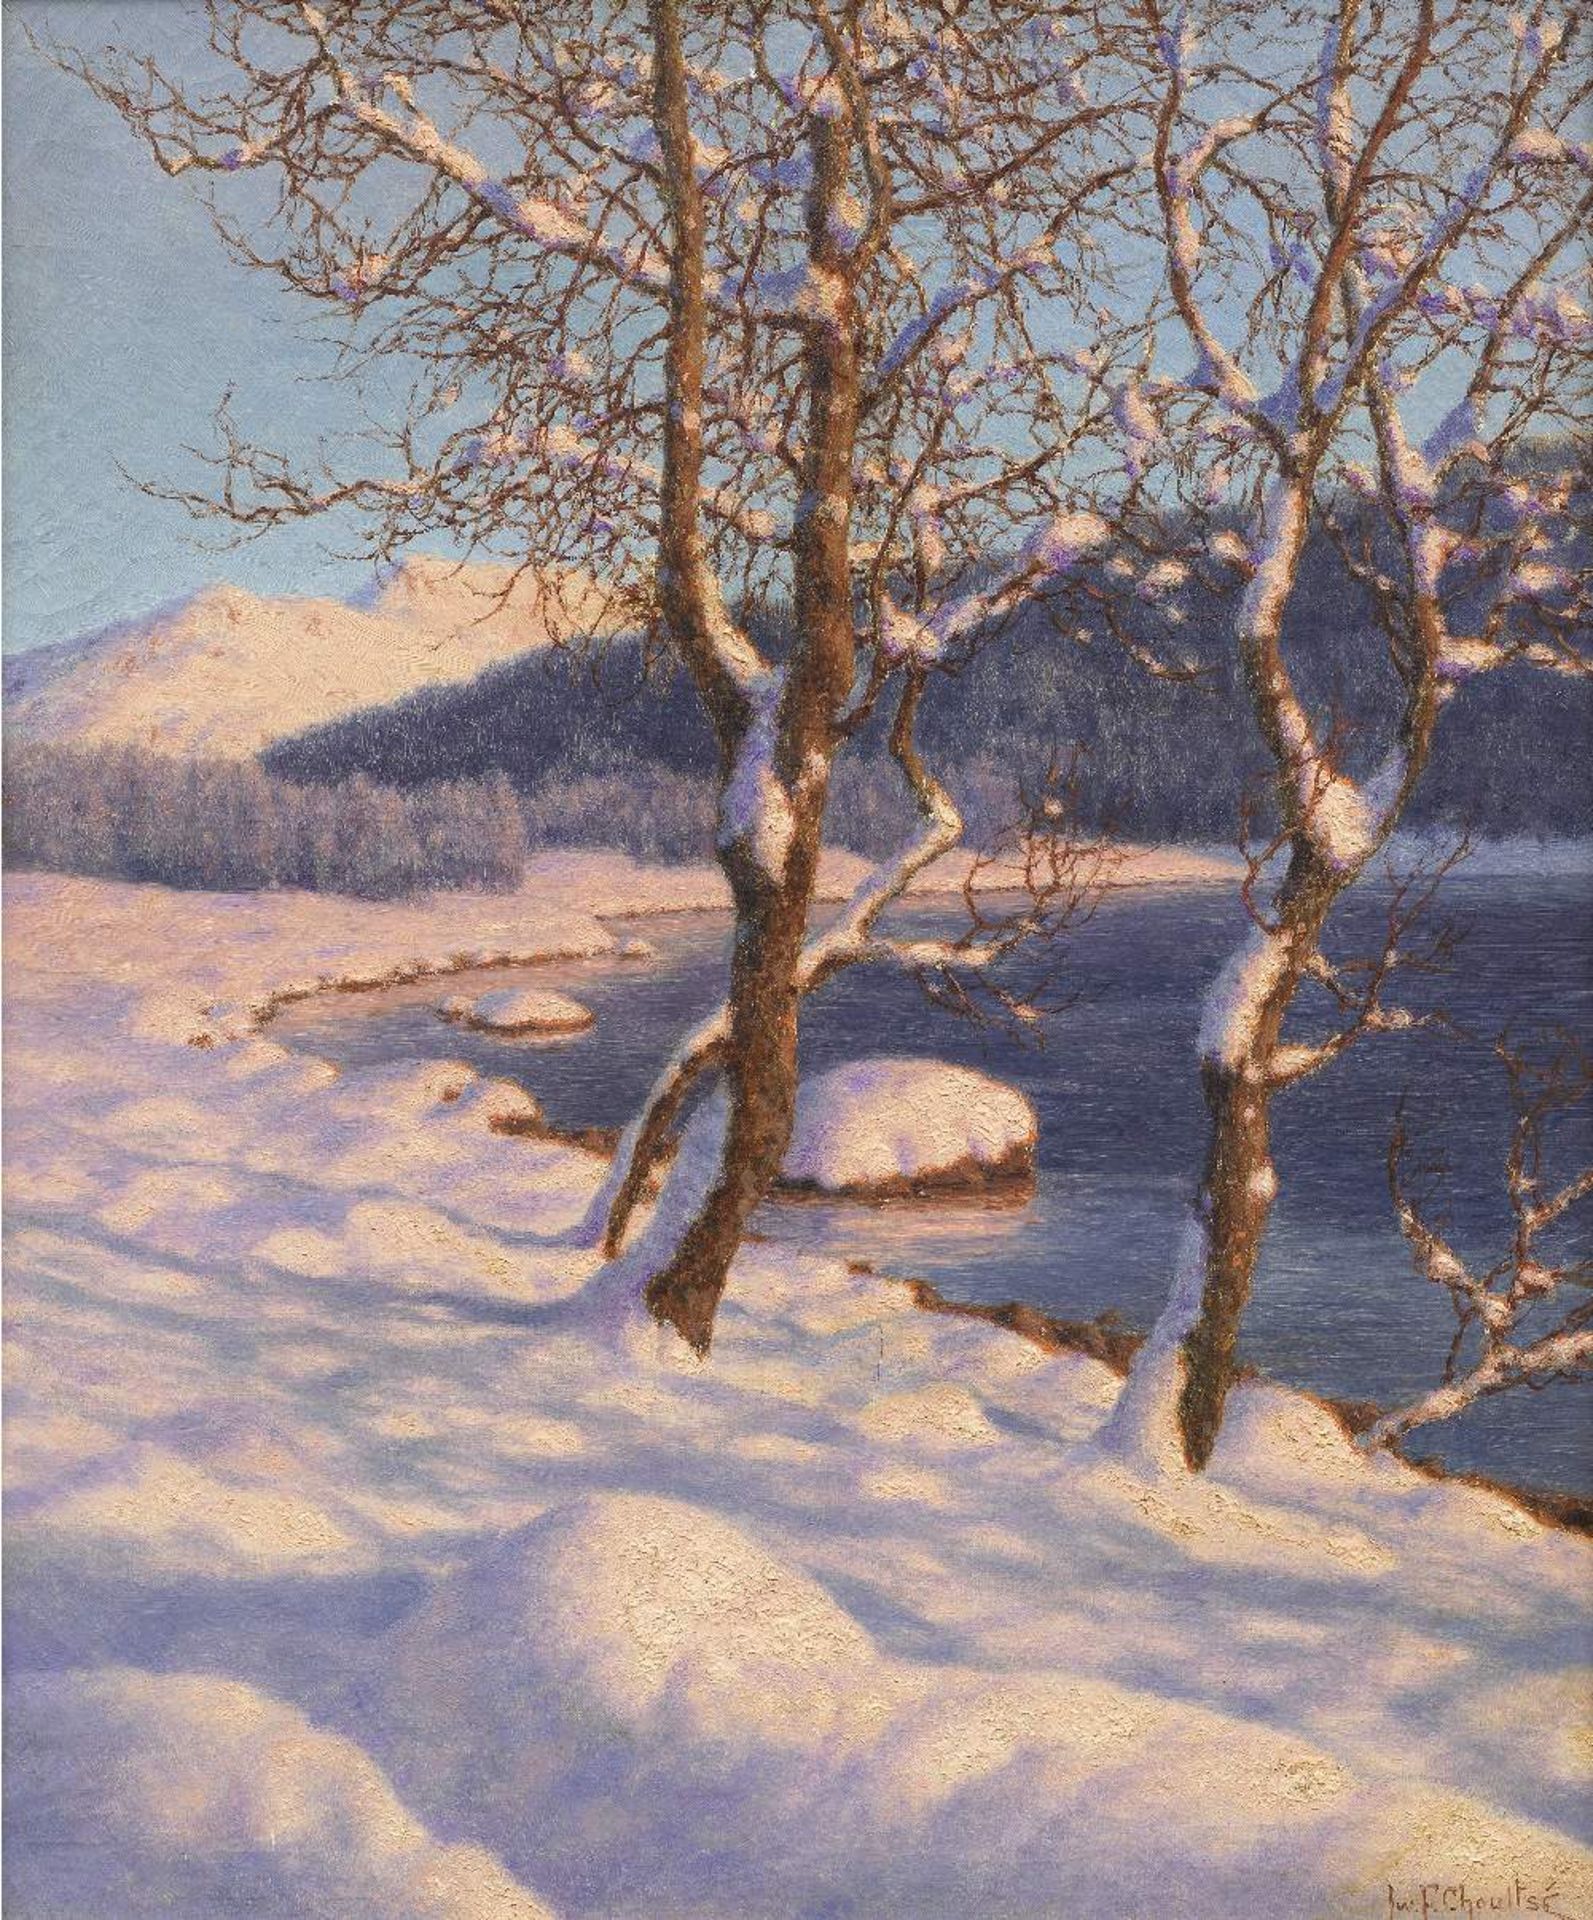 Ivan Fedorovich Choultse (Russian, 1874-1939) November evening, St Moritz